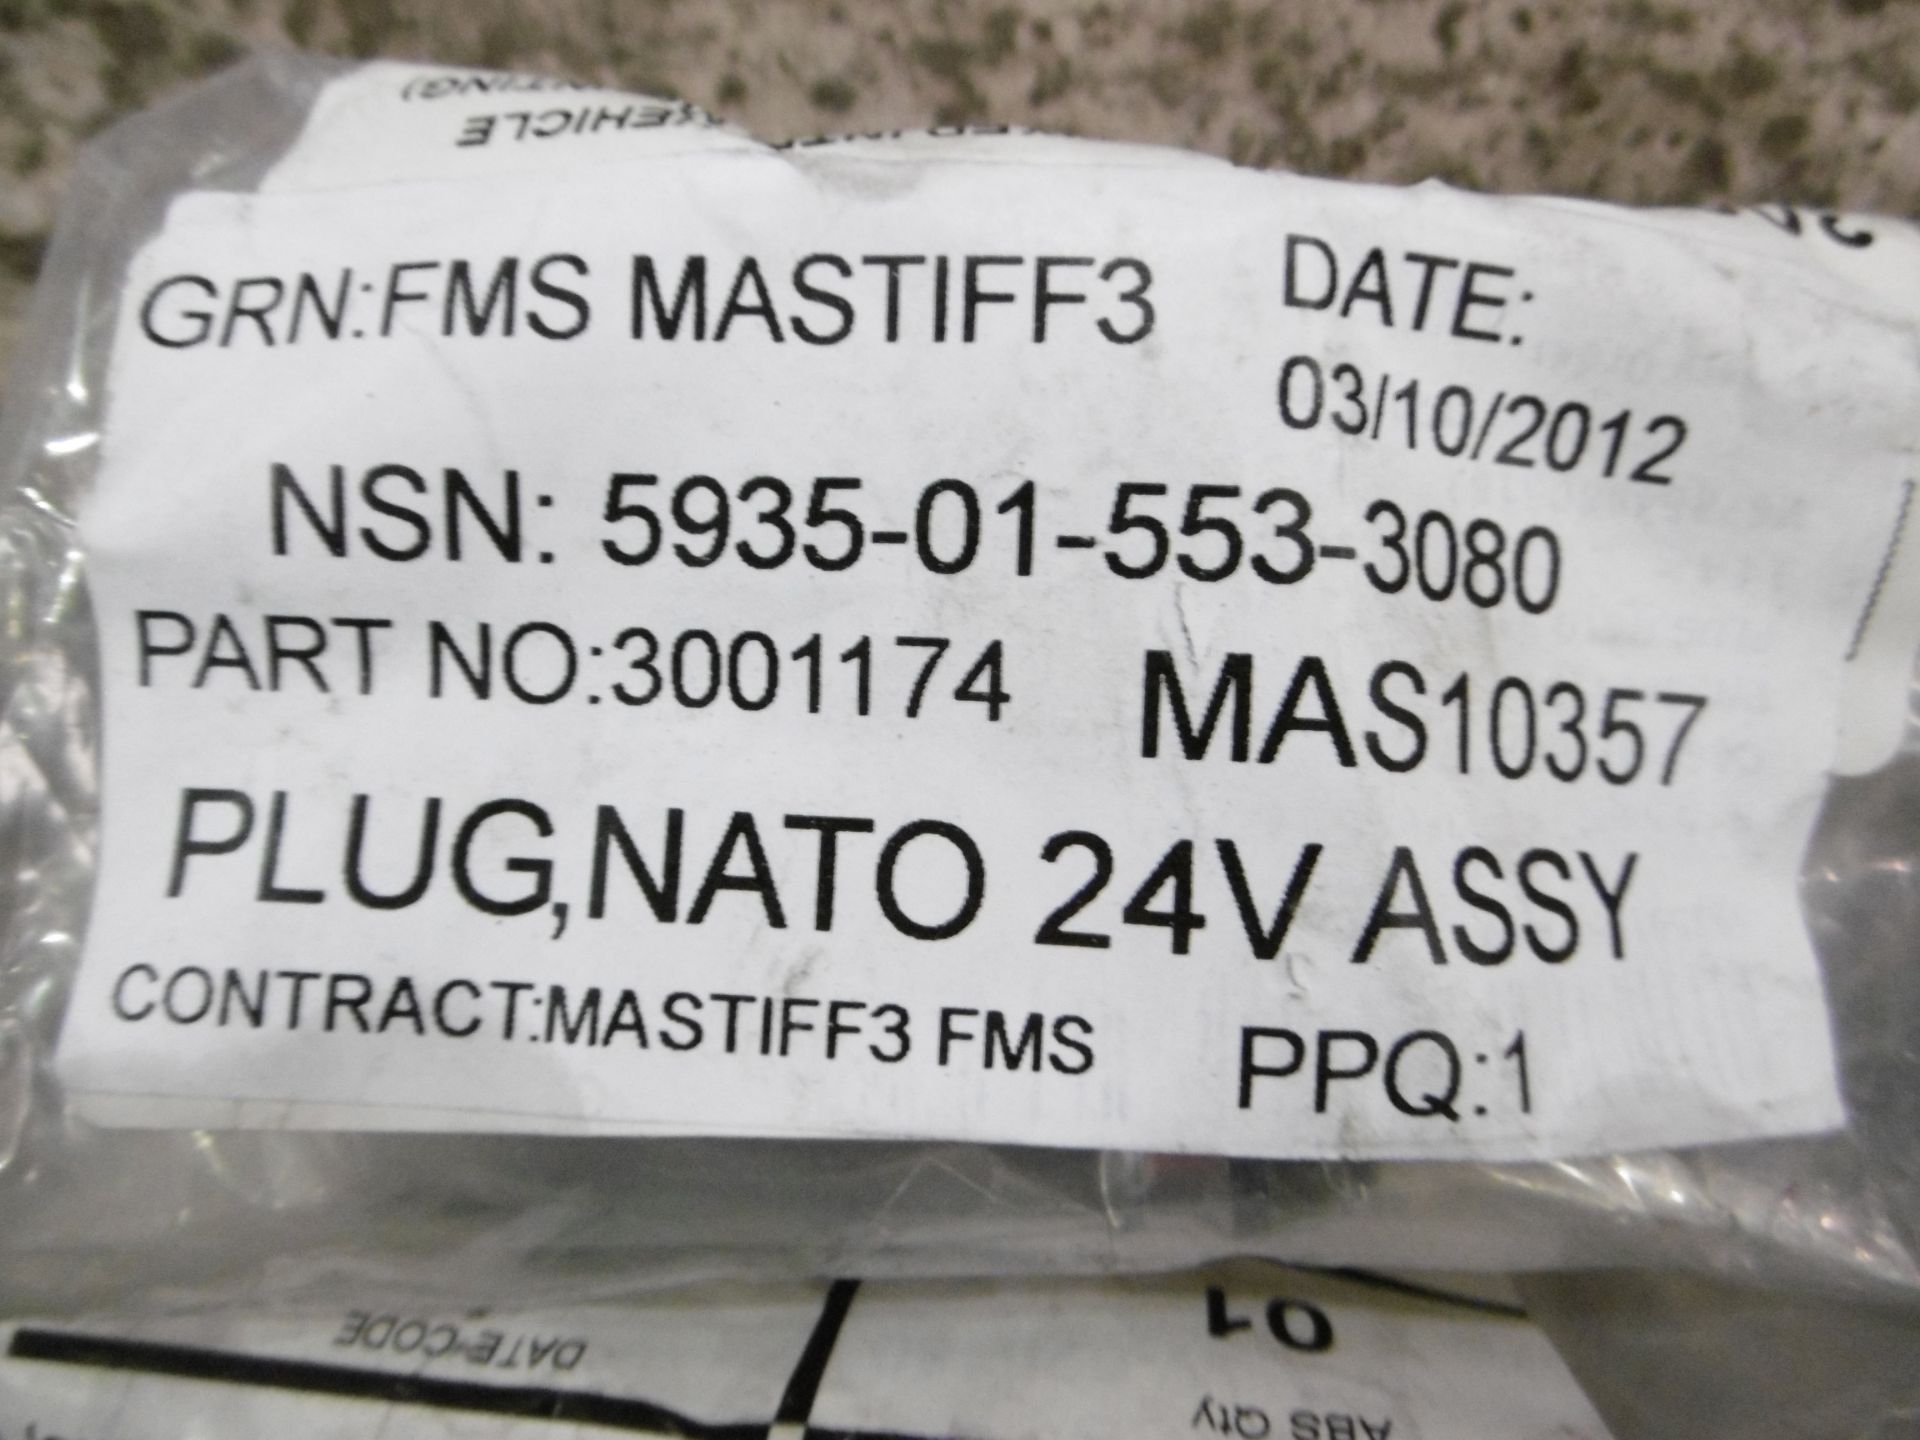 3 x NATO 24v Plug Assys - Image 2 of 6